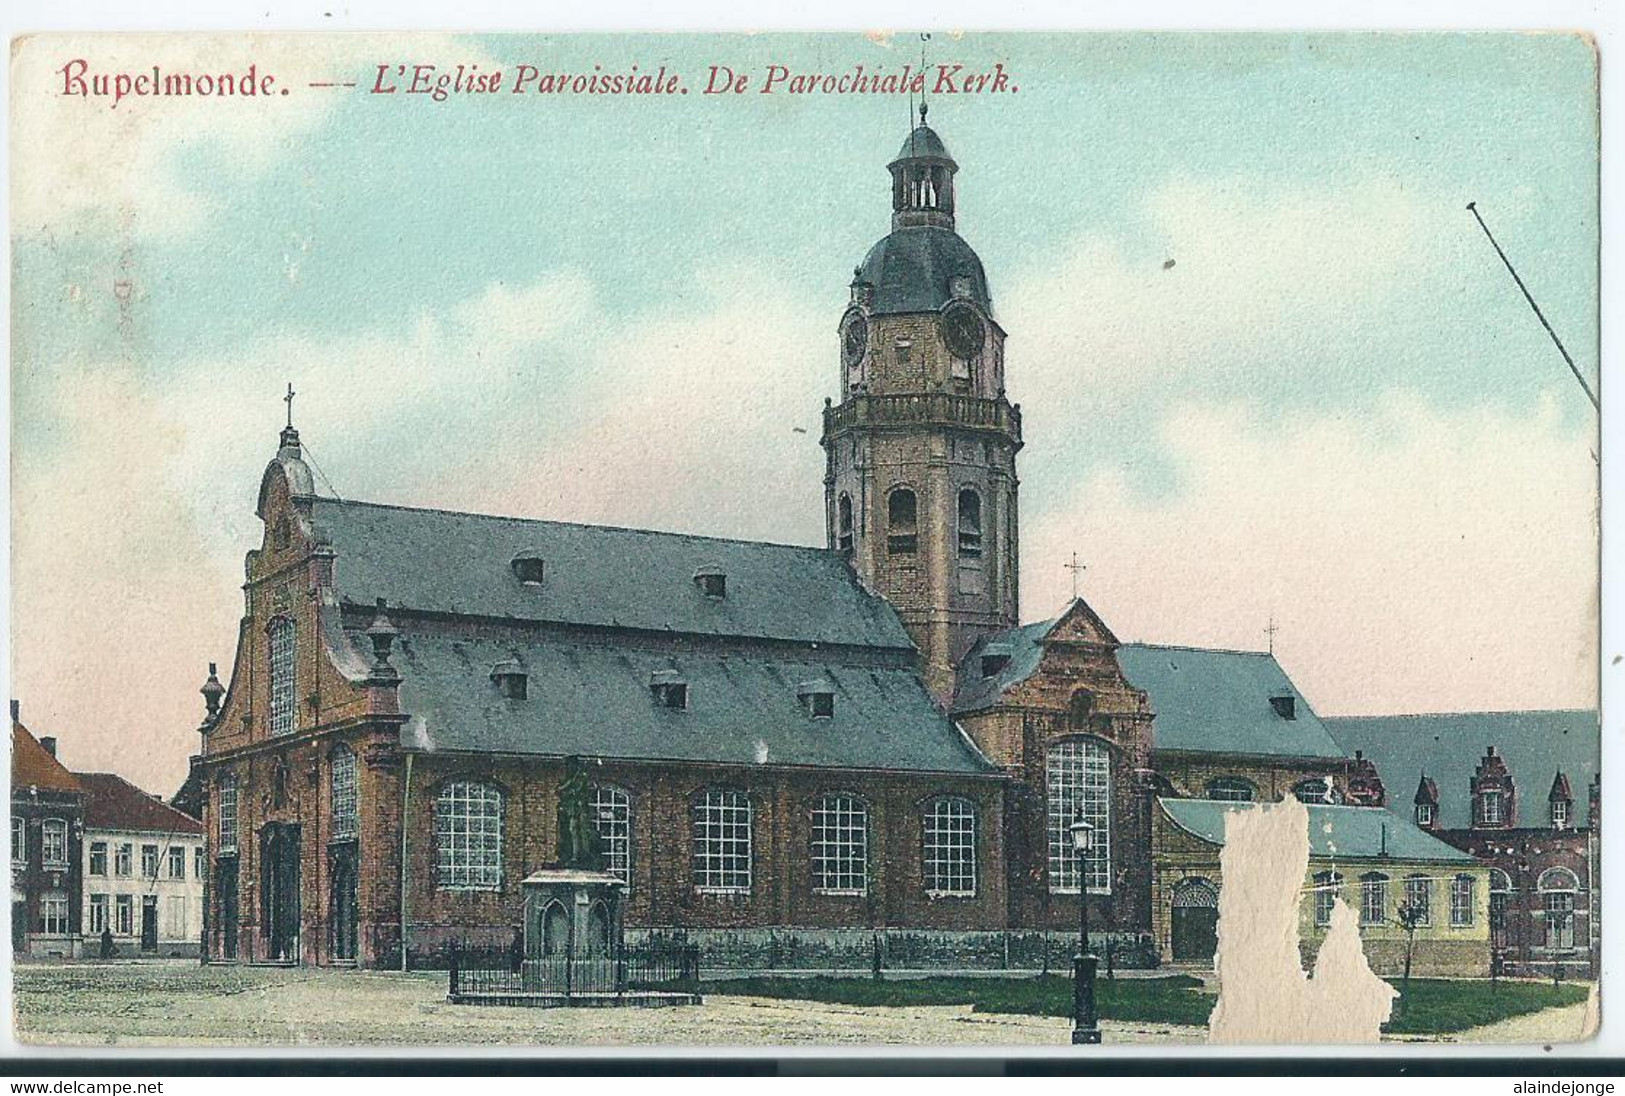 Rupelmonde - L'Eglise Paroissiale - De Parochiale Kerk - 1908 - Kruibeke